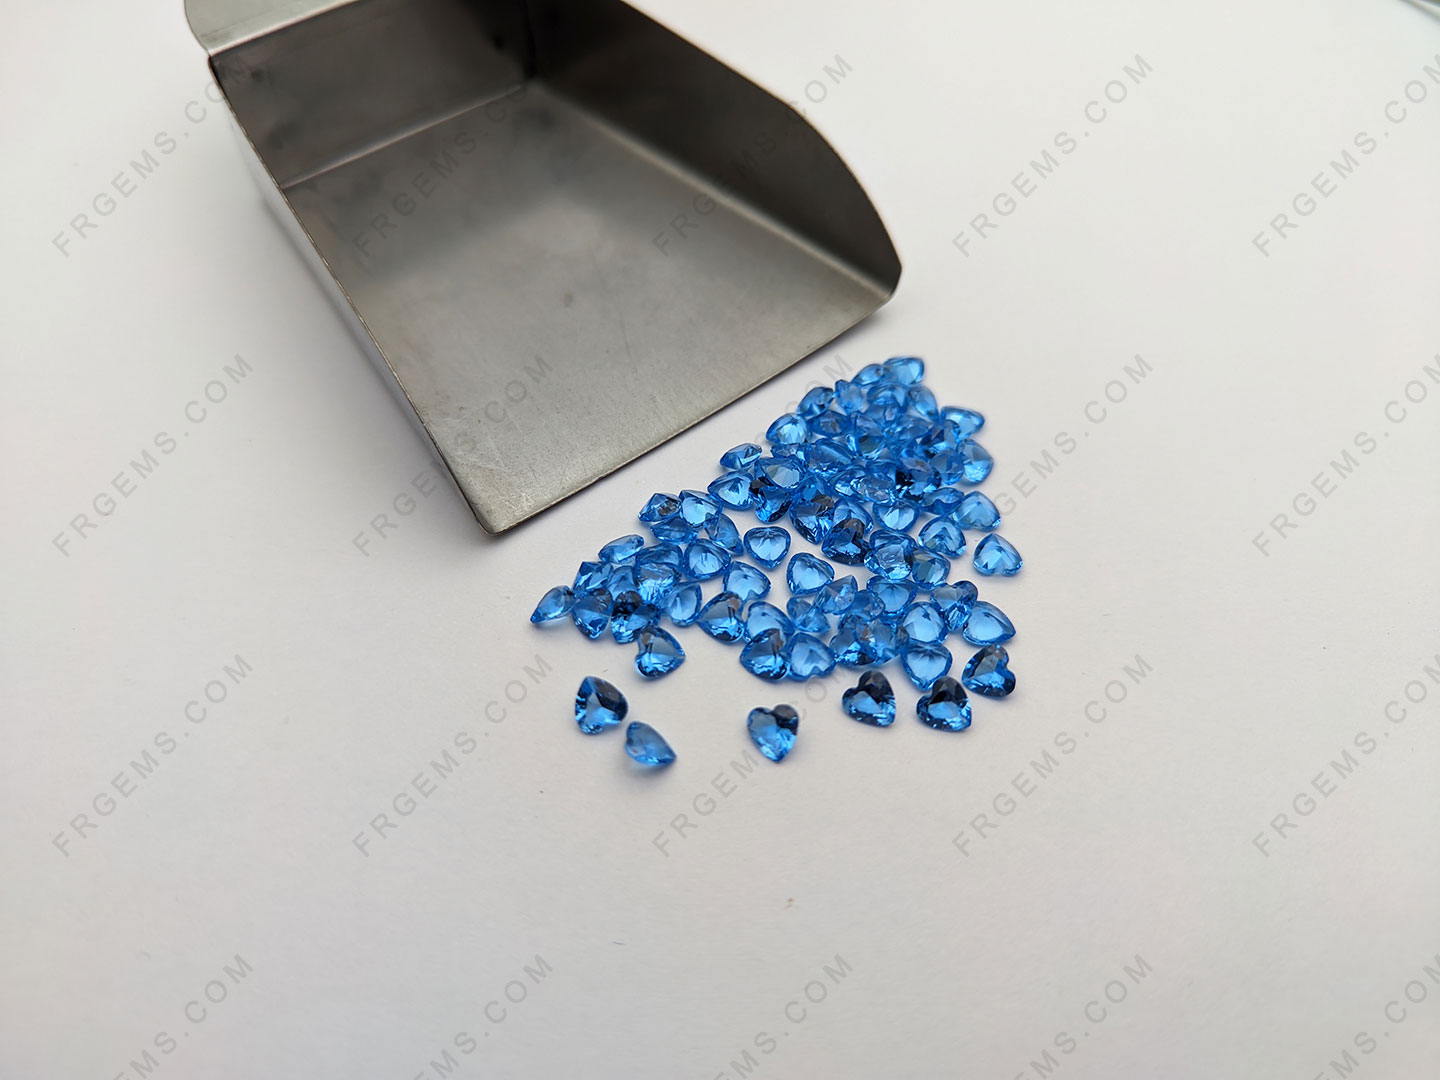 Wholesale Loose Nano Crystal Topaz Blue Color Heart shape Faceted Cut 4x4mm gemstones